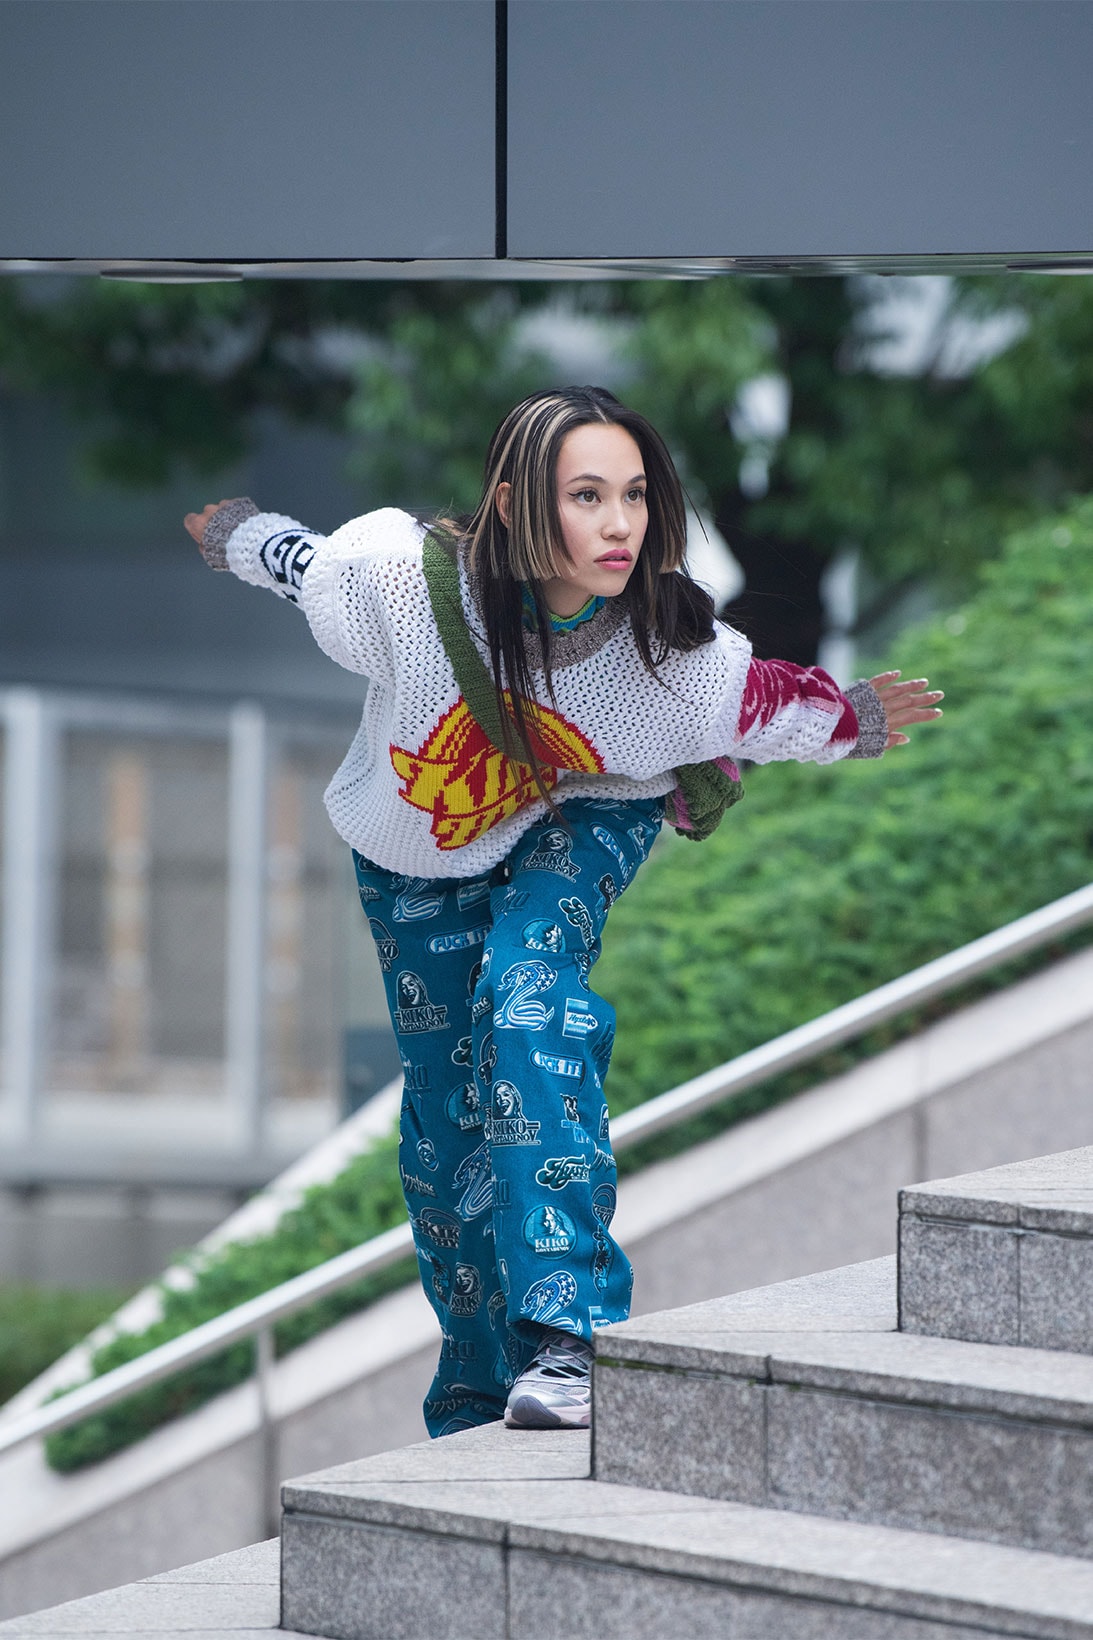 Kiko Mizuhara Kostadinov Hysteric Glamour Campaign Collaboration Images Release 